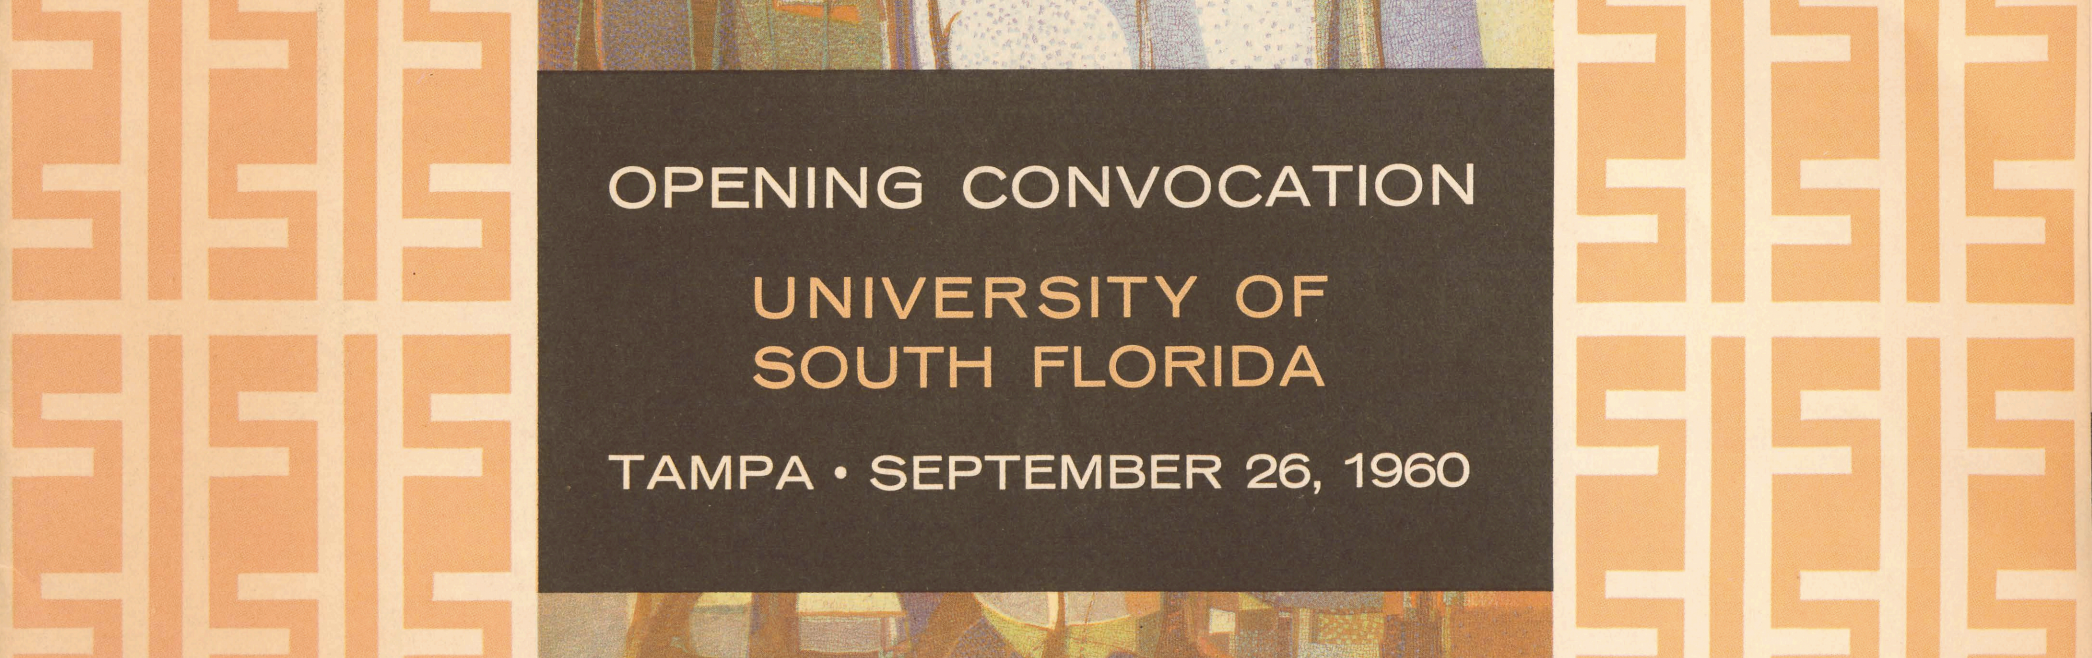 USF Graduation and Convocation Programs